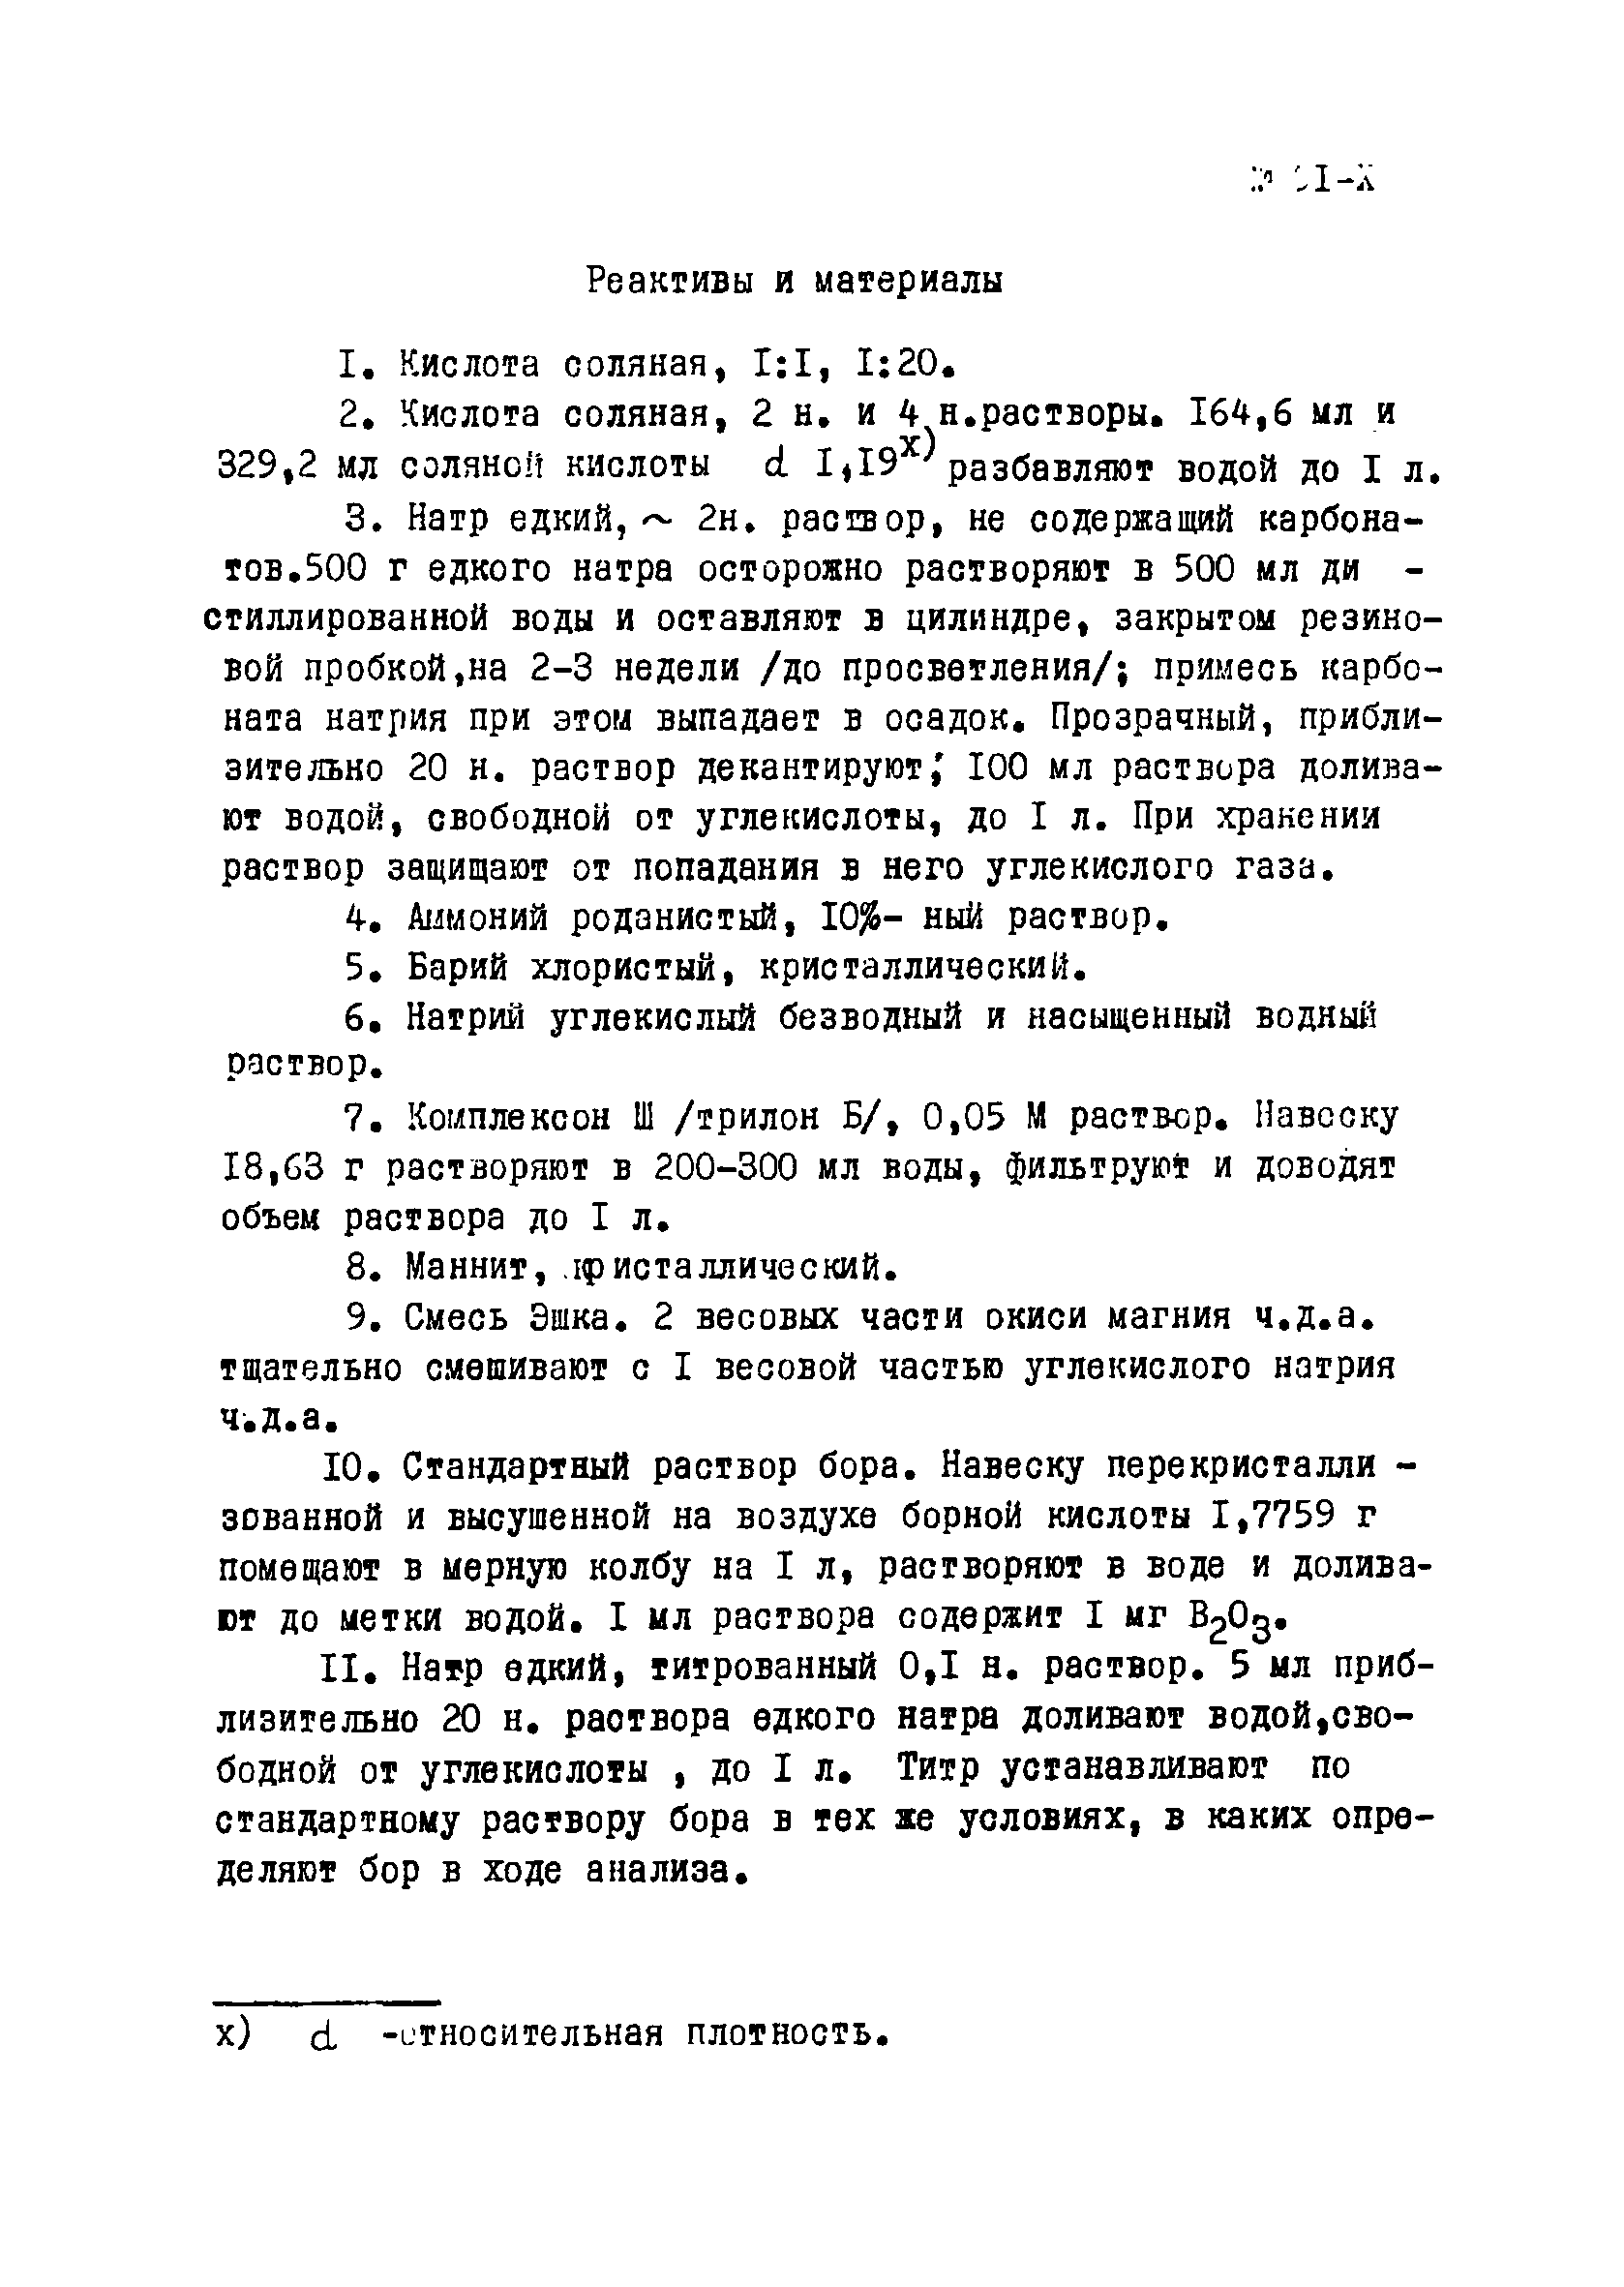 Инструкция НСАМ 91-Х